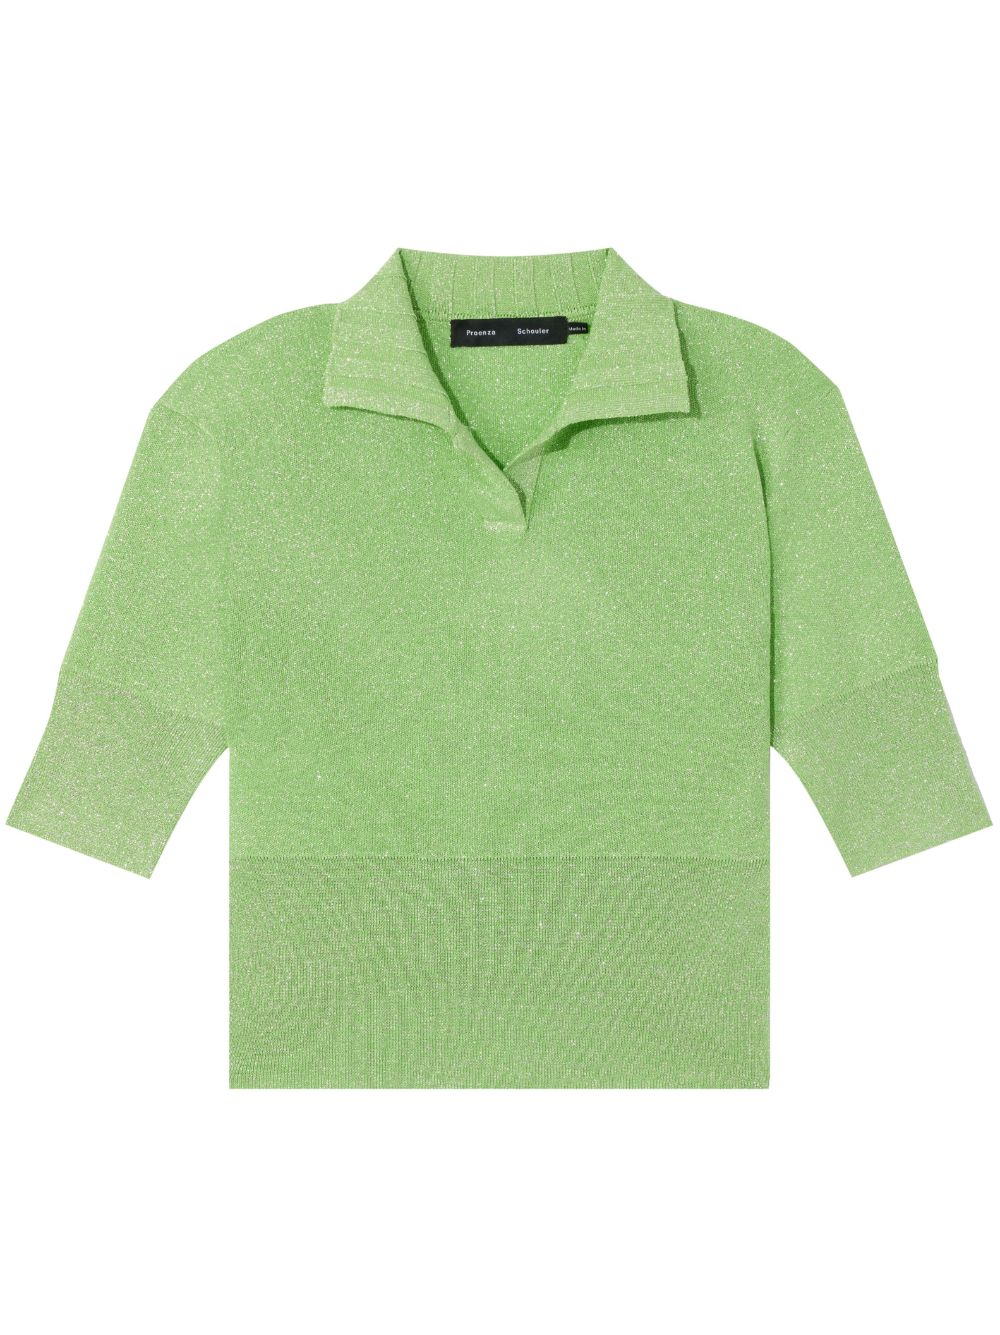 Proenza Schouler lurex knit top - Green von Proenza Schouler